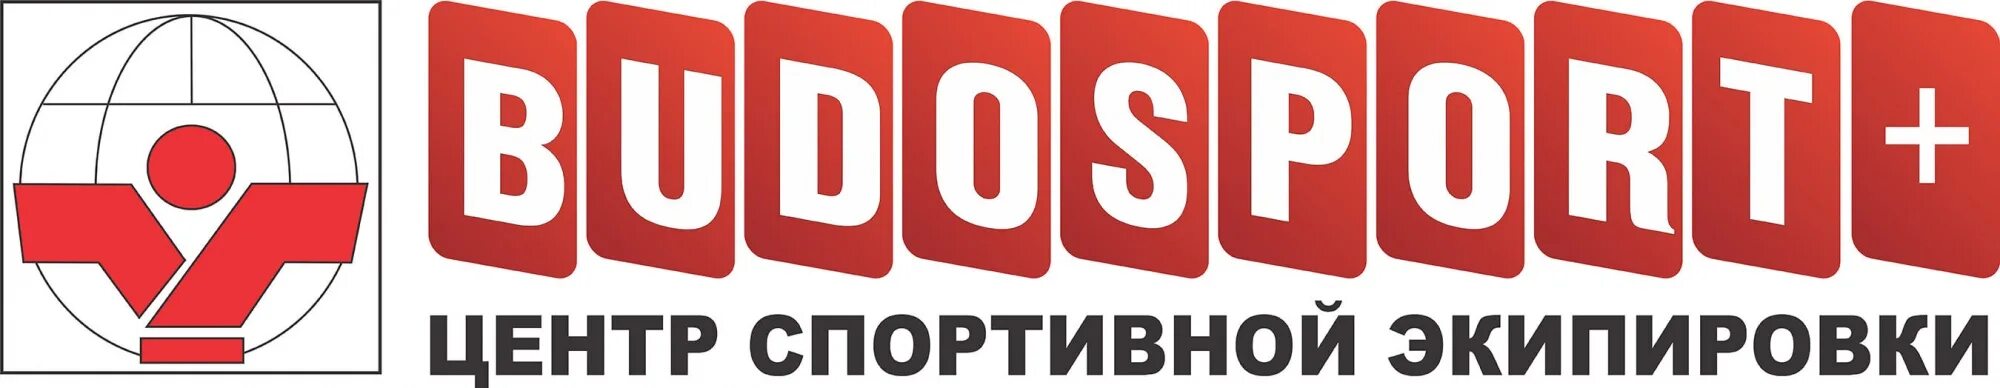 Логотип Будоспорт. Budosport.